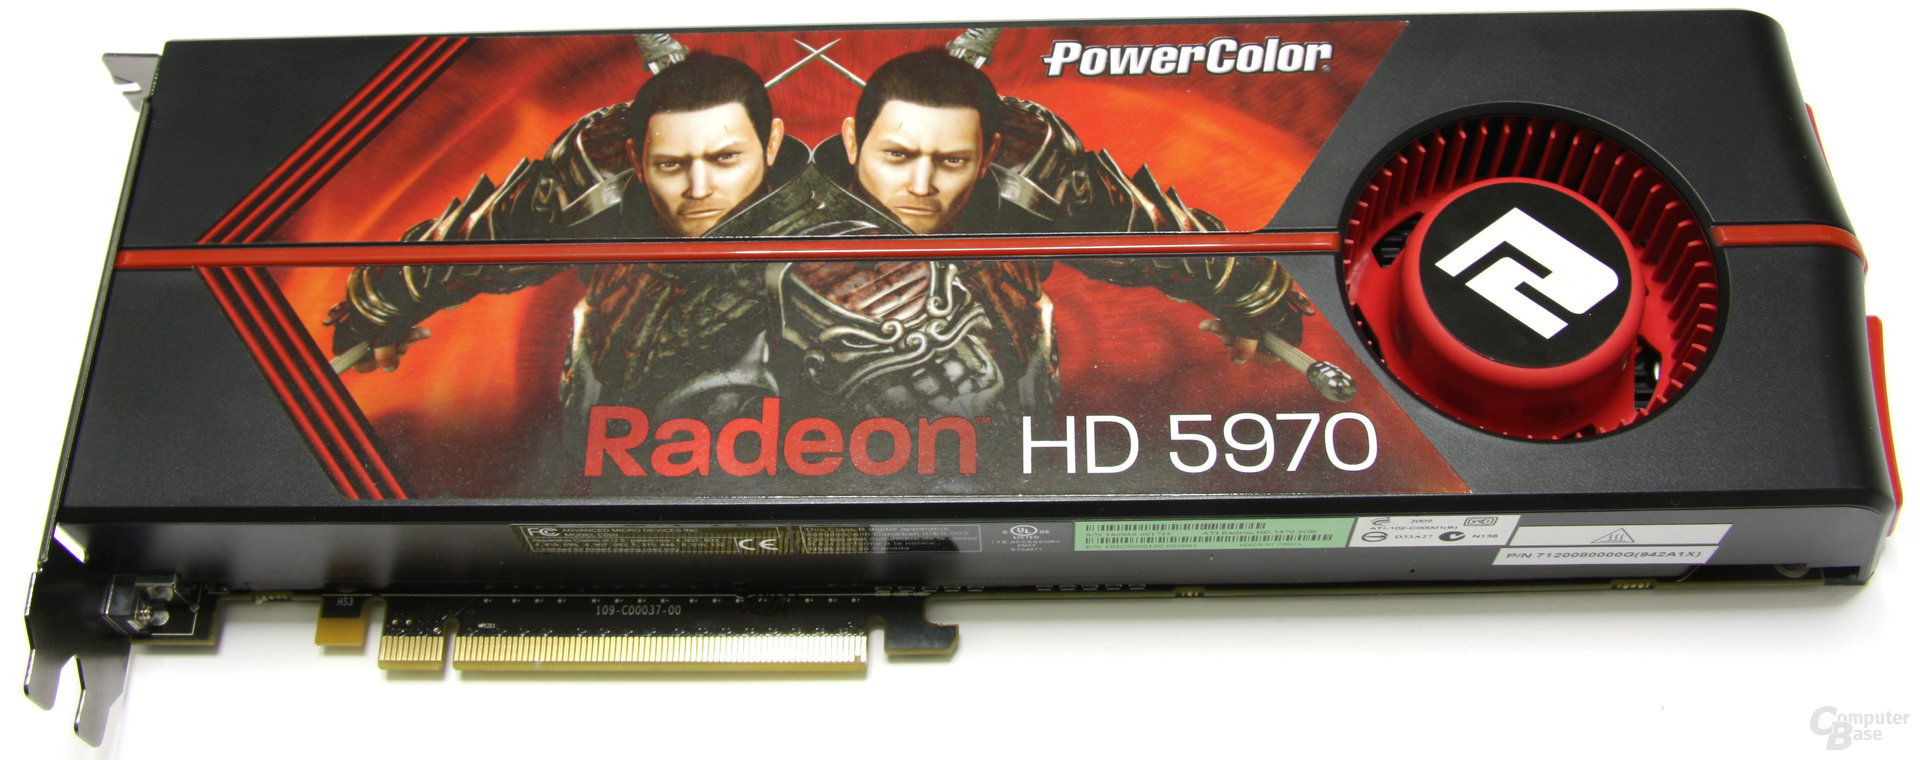 PowerColor Radeon HD 5970